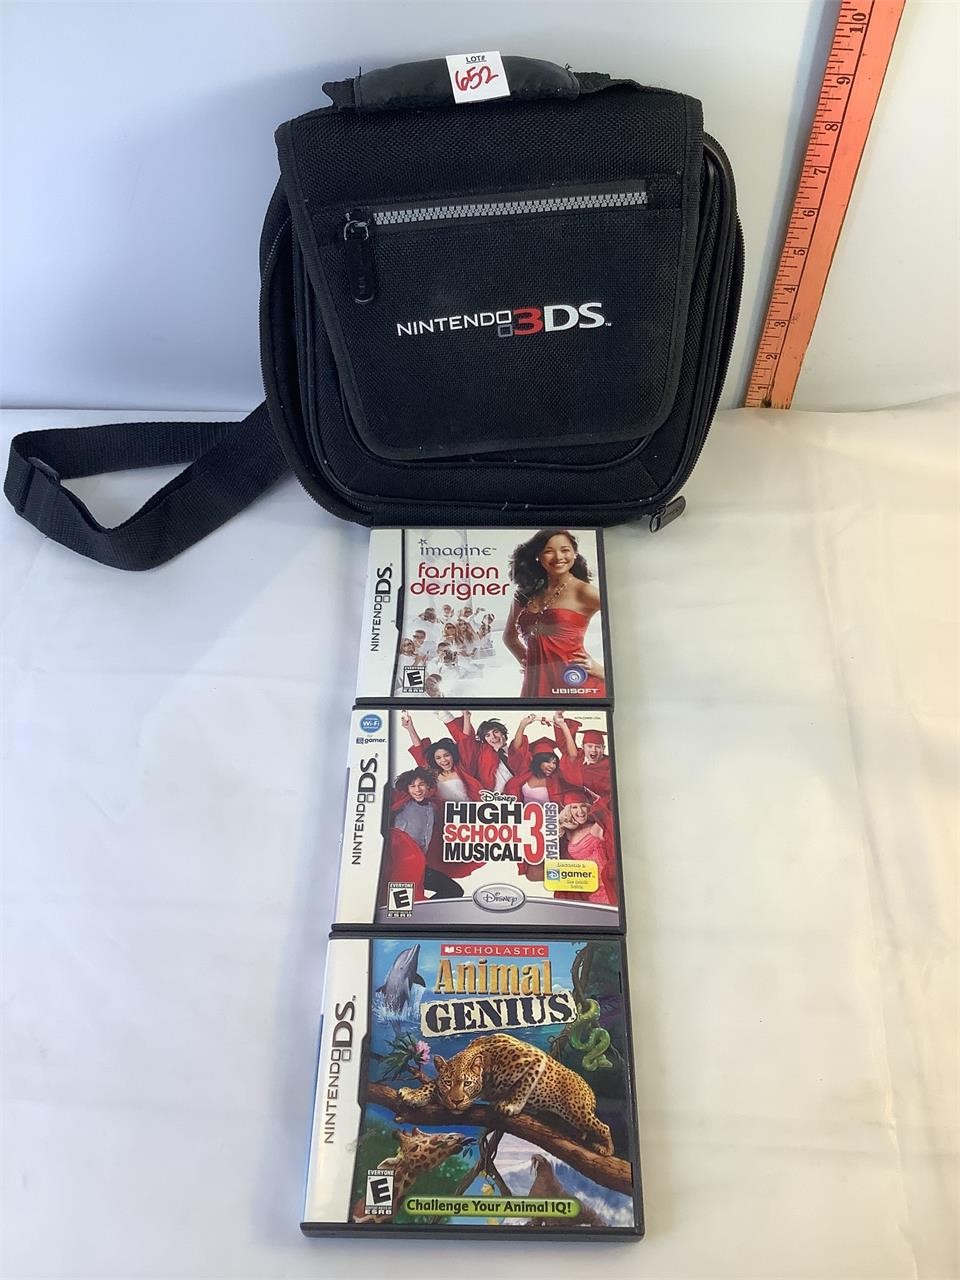 Nintendo DS Games & 3DS Bag